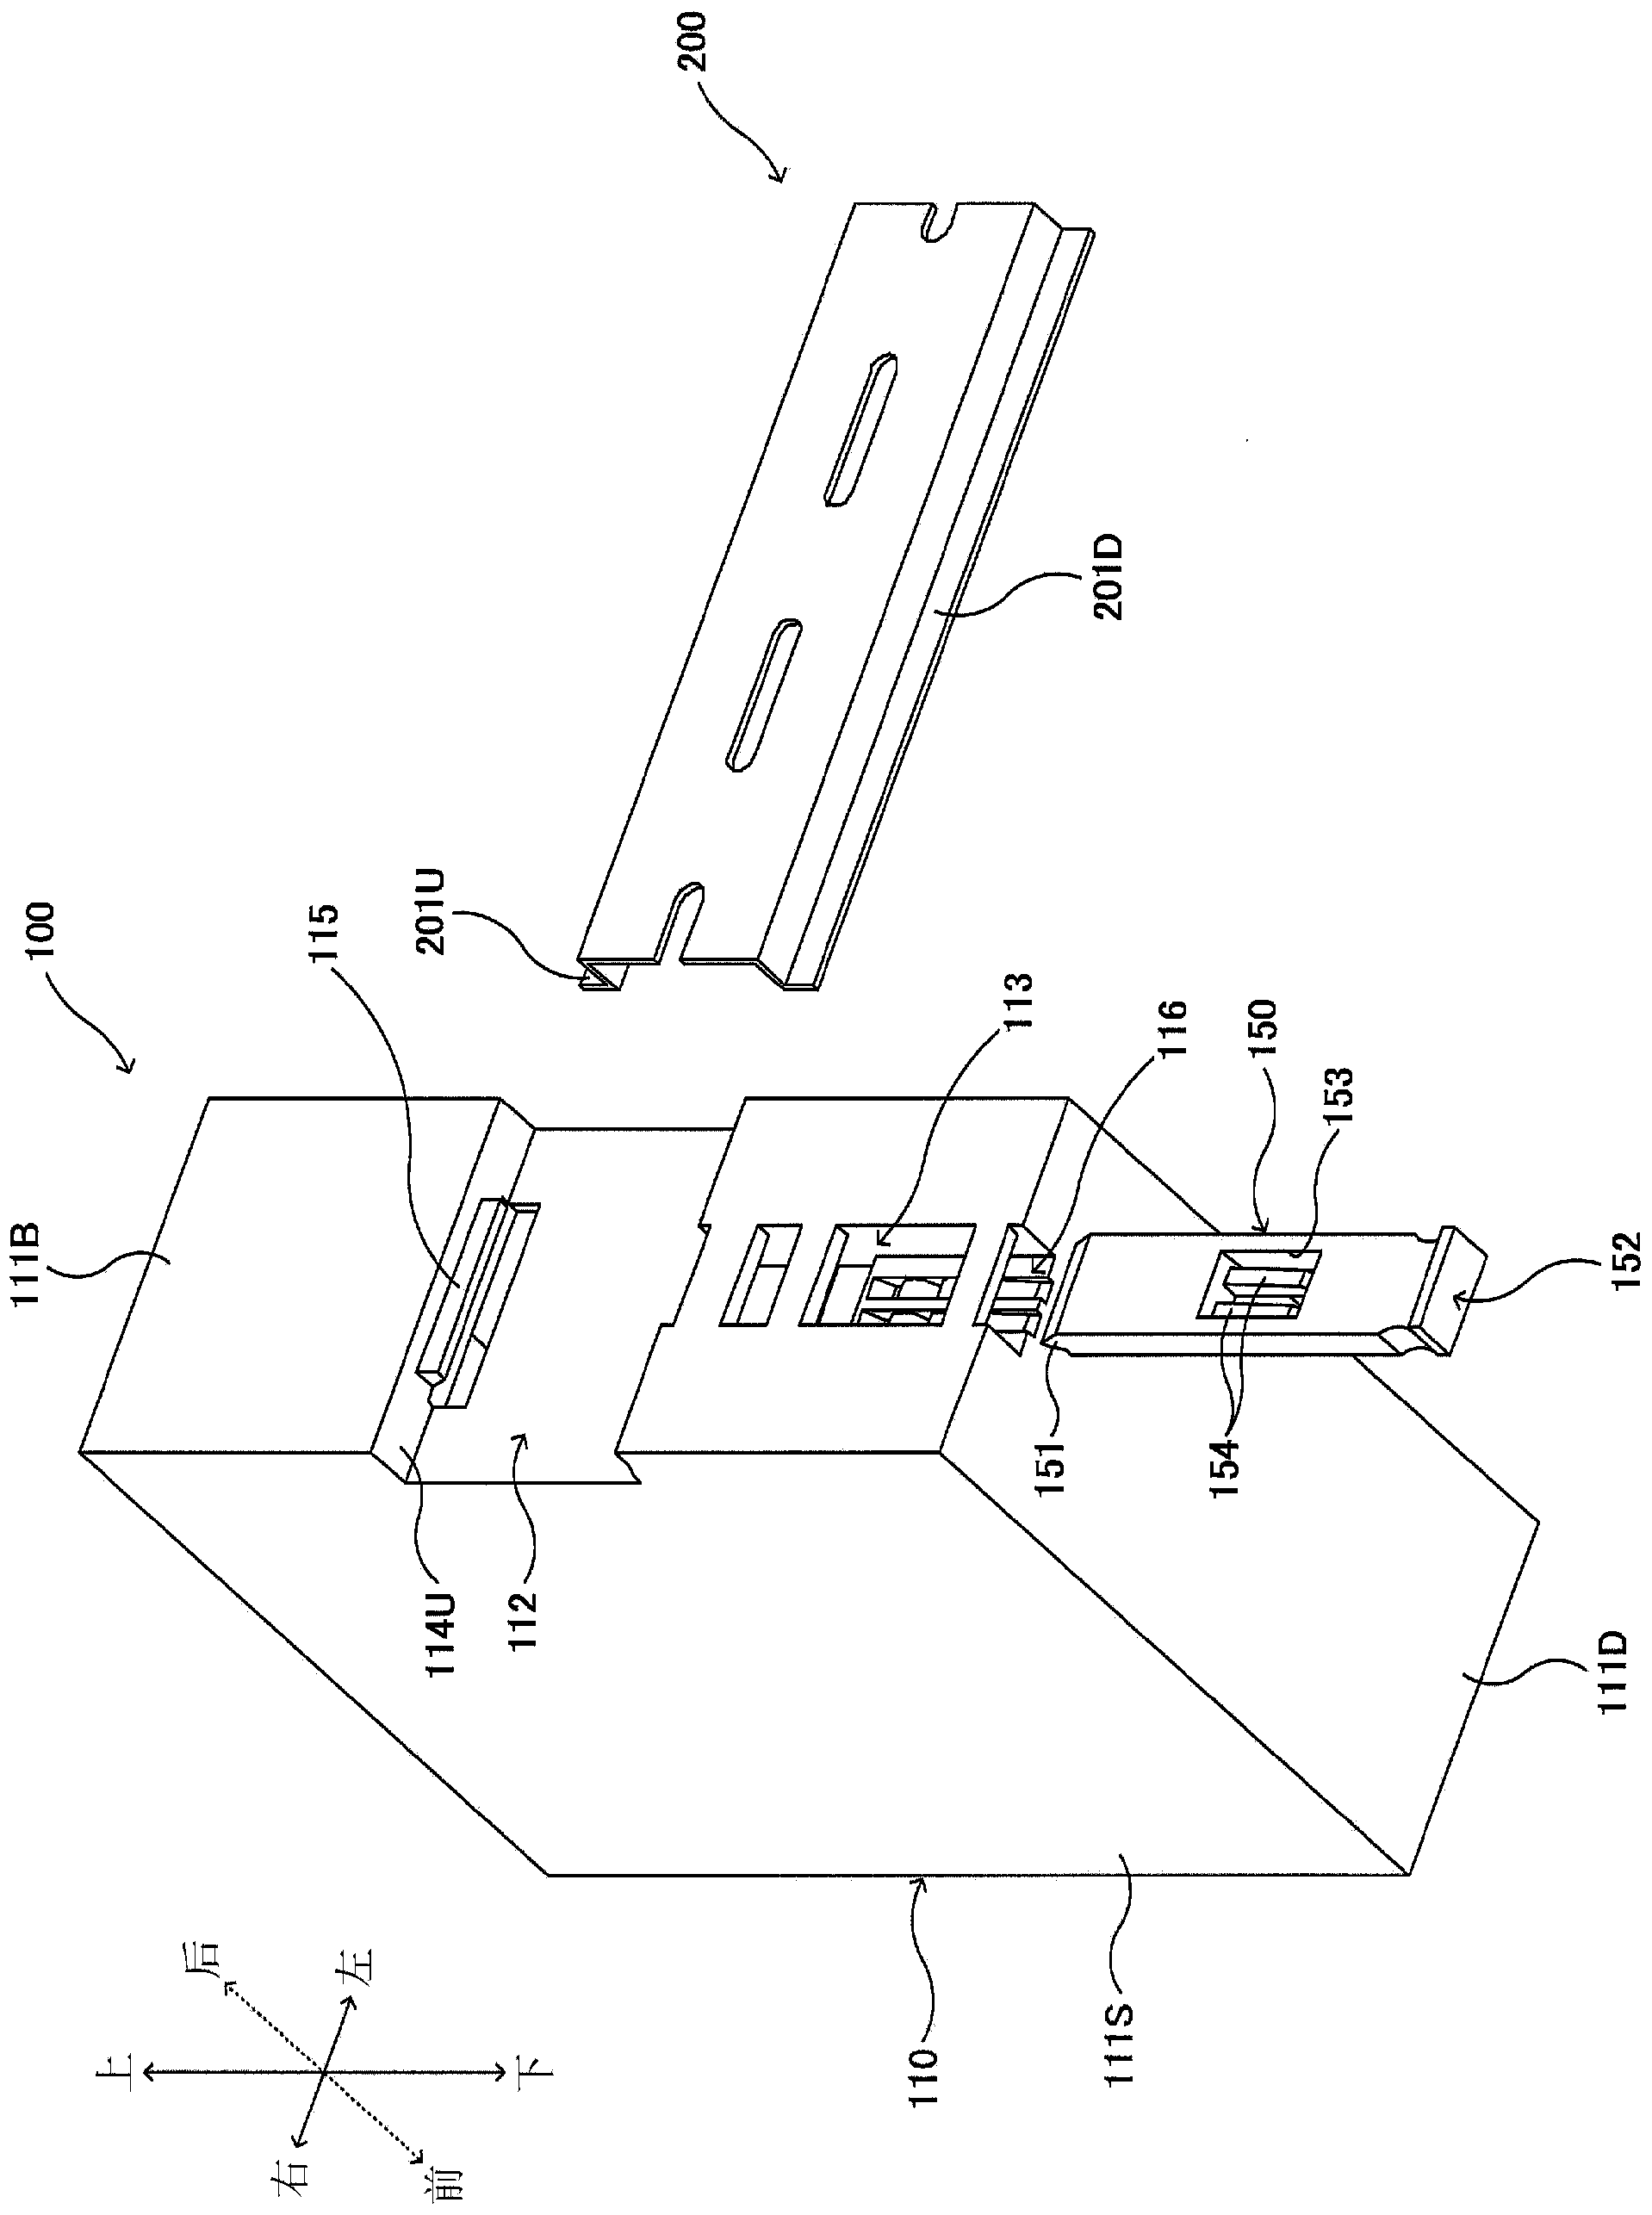 DIN-rail mount type device